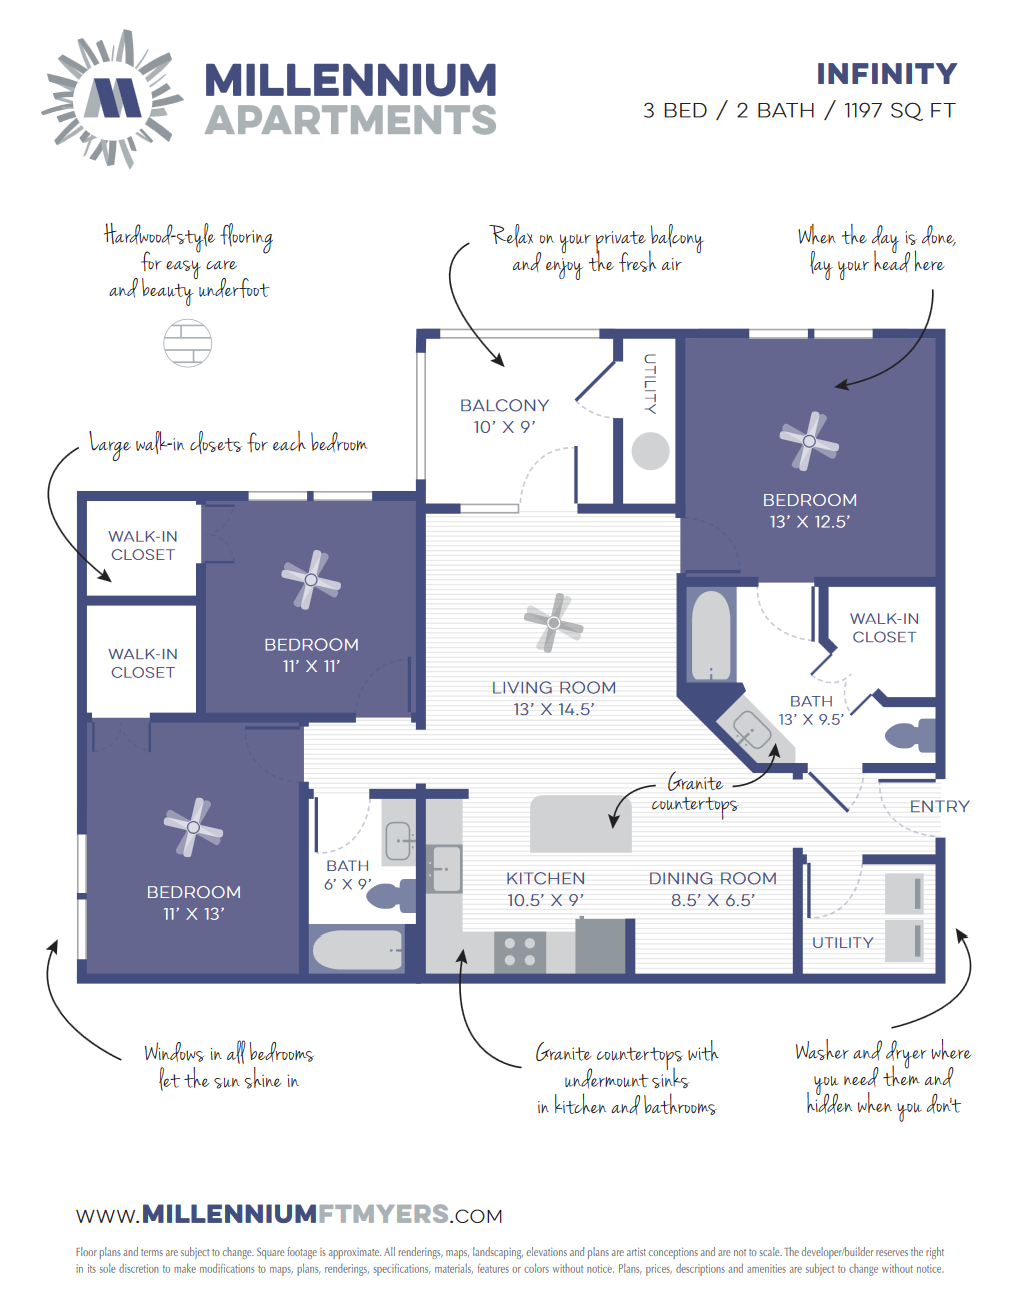 Infinity Floorplan by Millennium Apartments